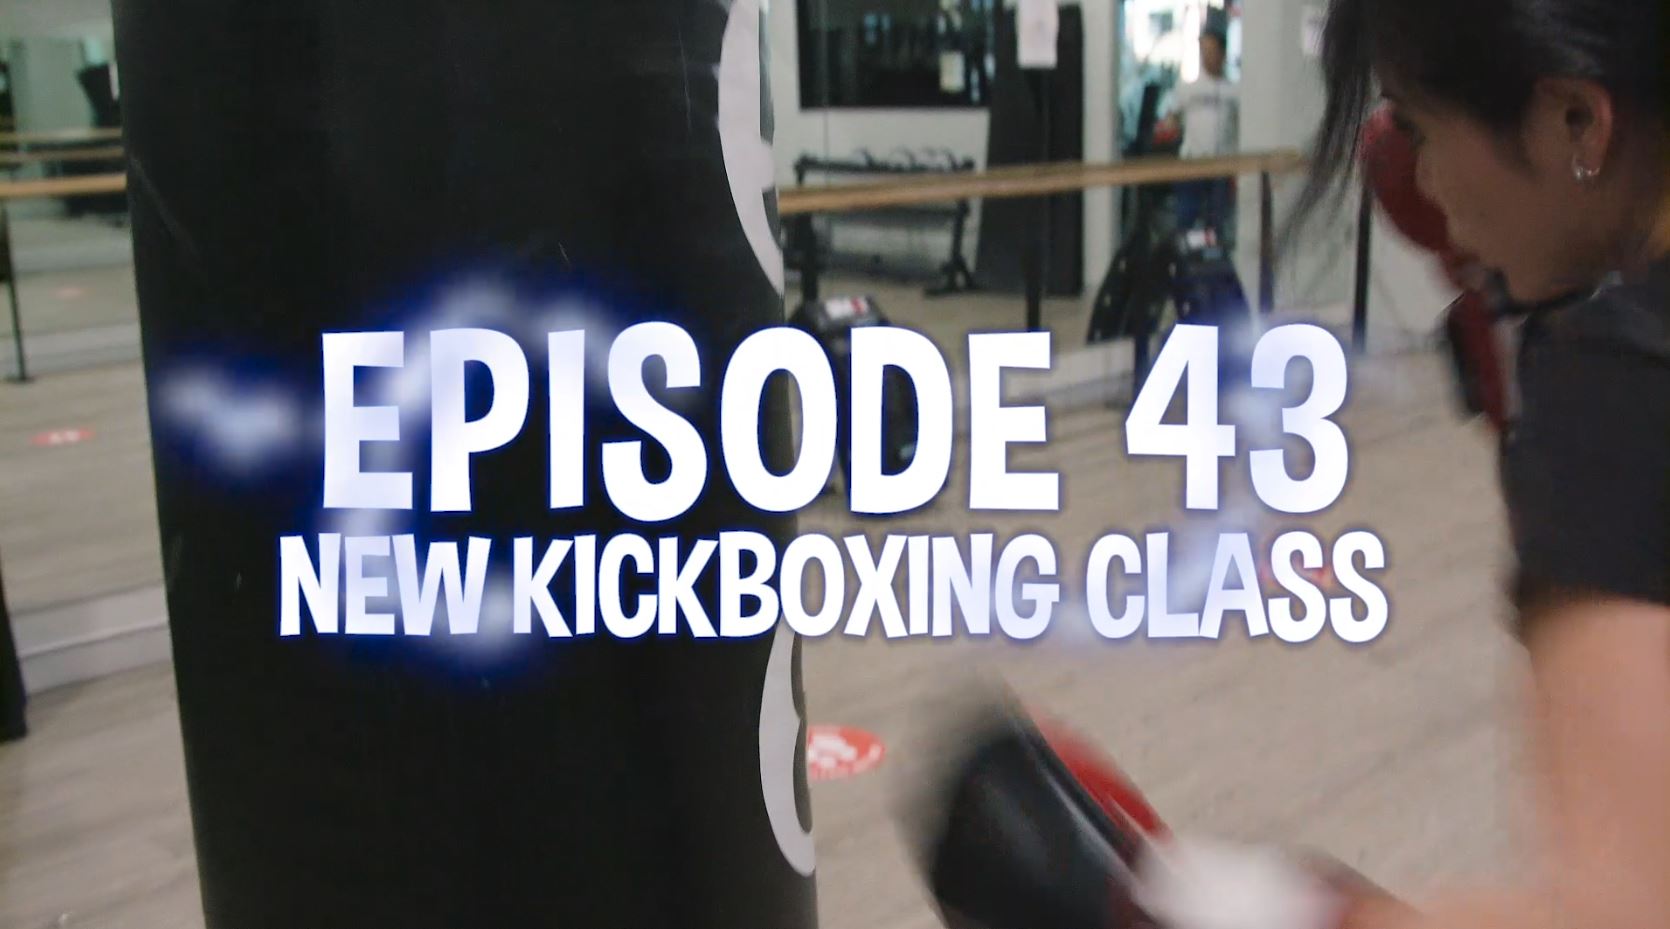 We’re bringing kickboxing fitness republic video series online